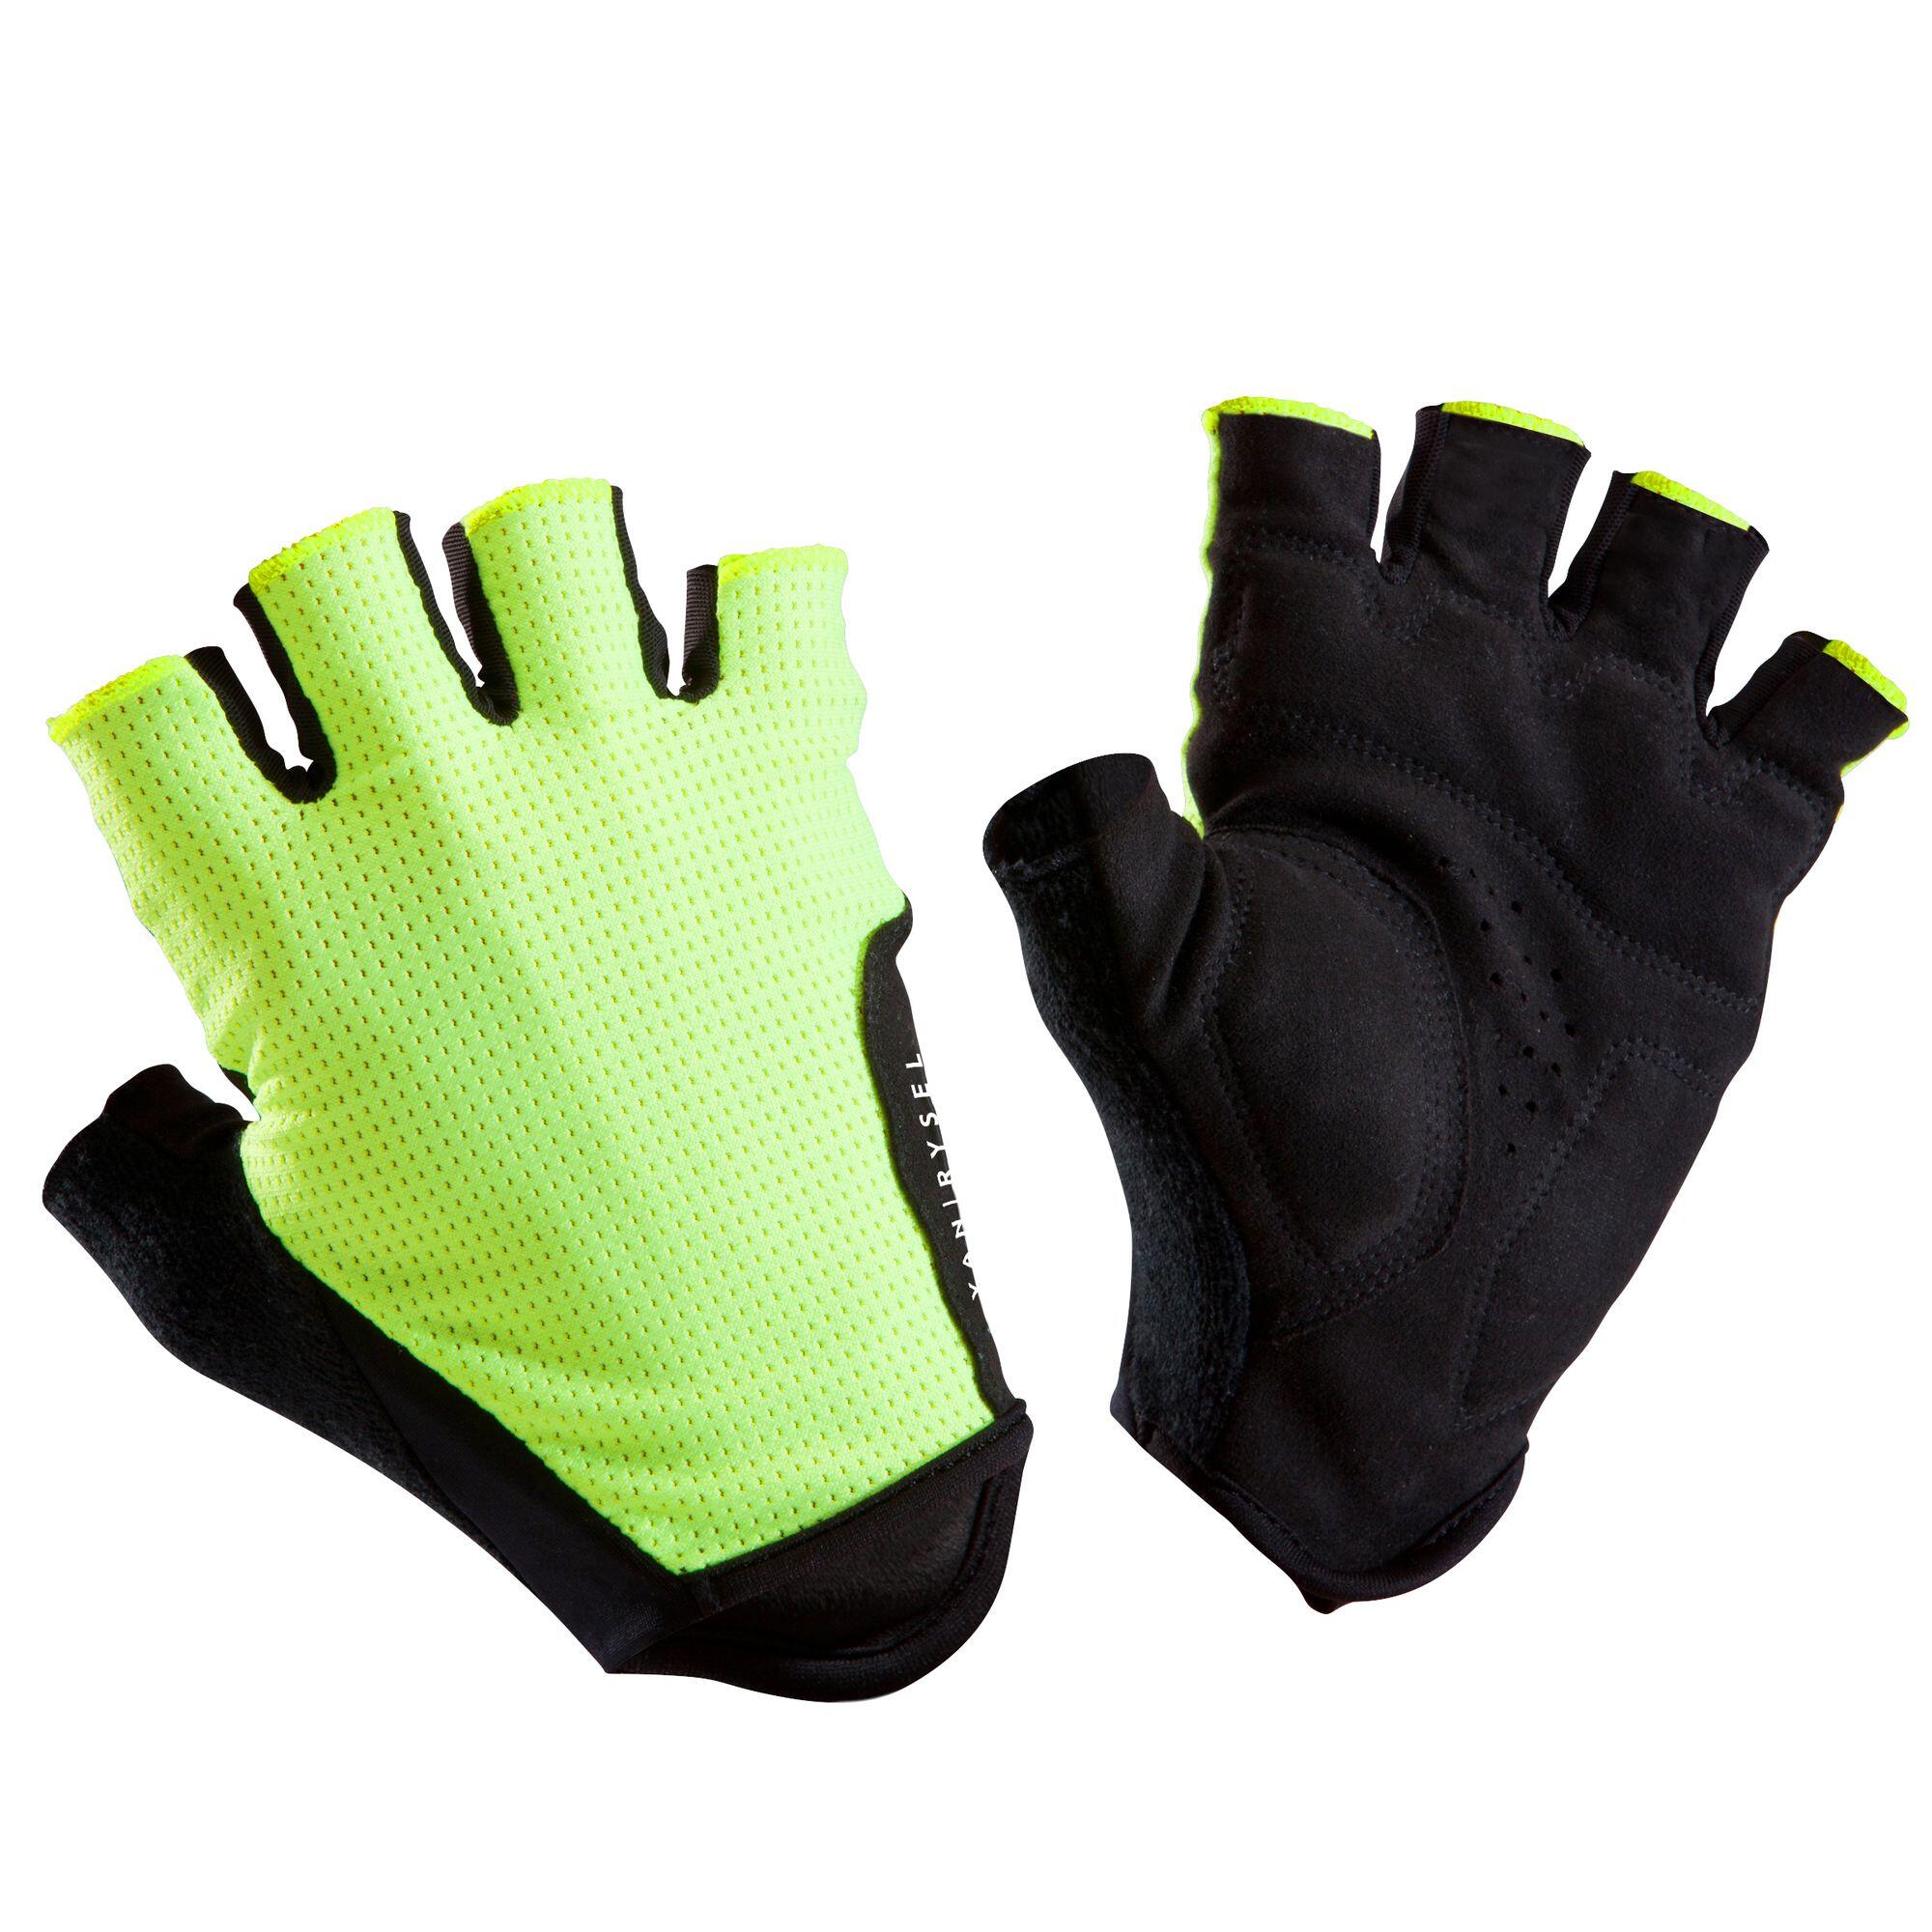 500 Road Cycling Gloves - VAN RYSEL